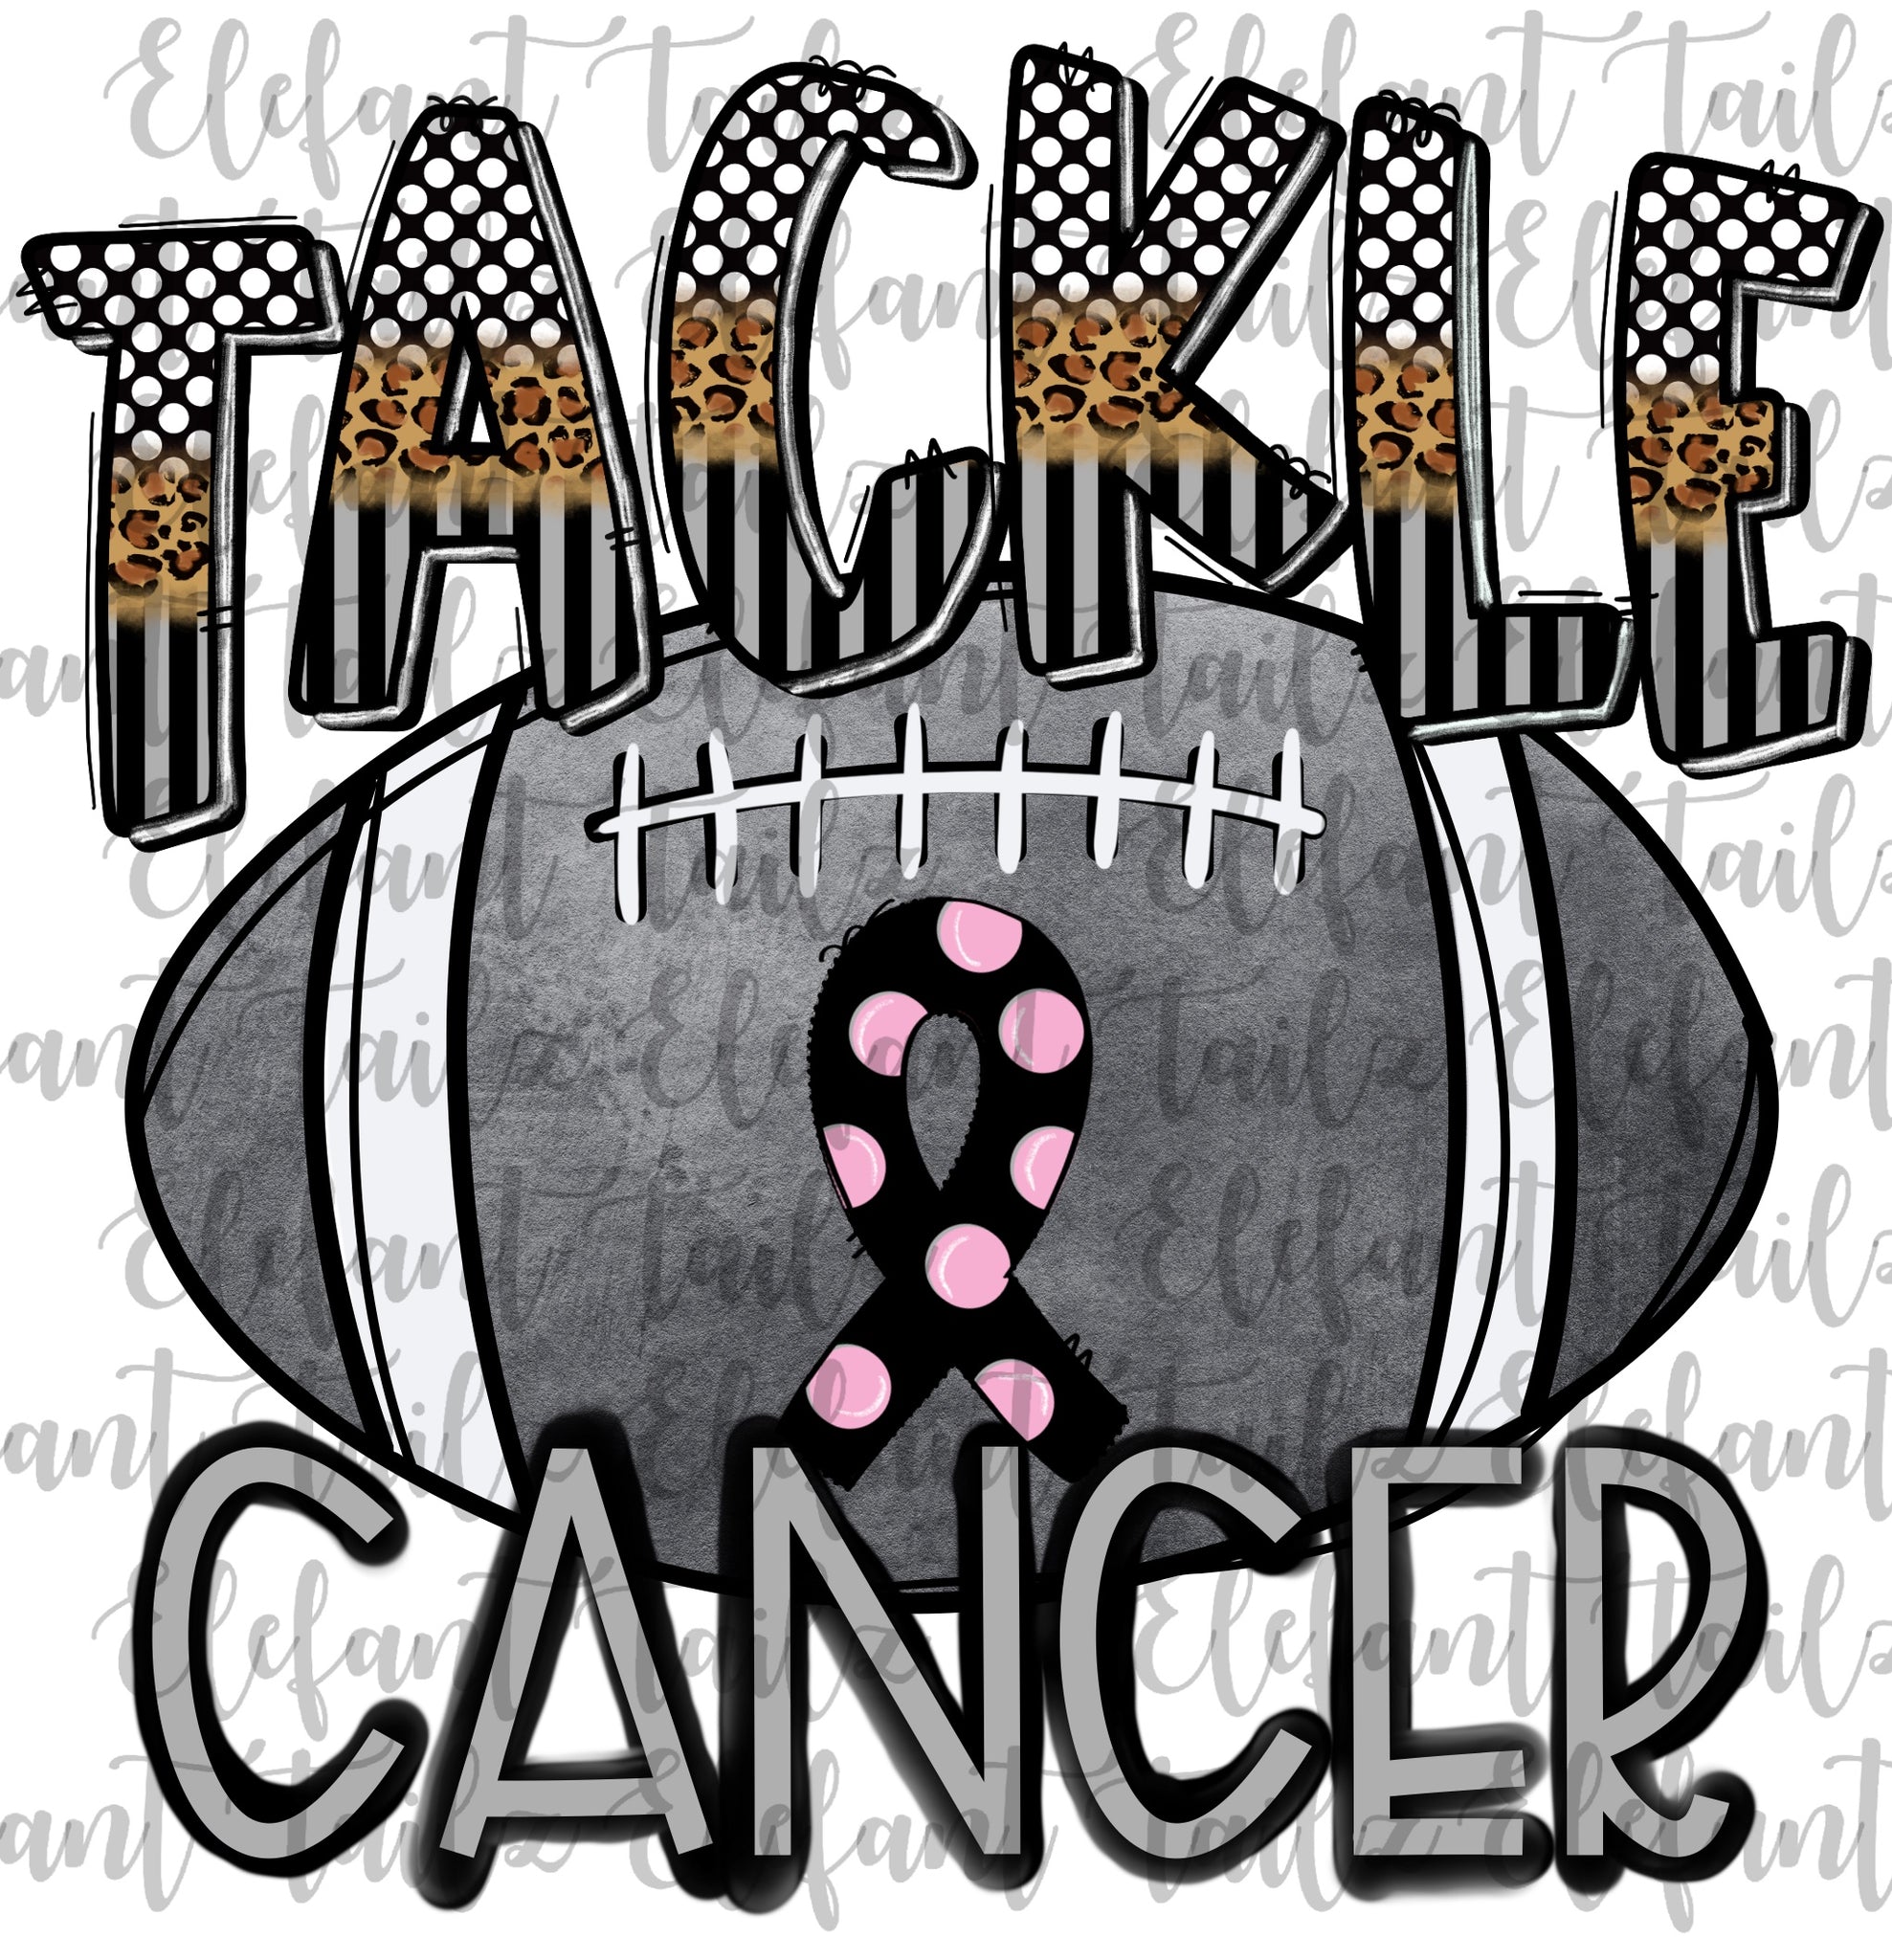 Tackle Cancer Football Black